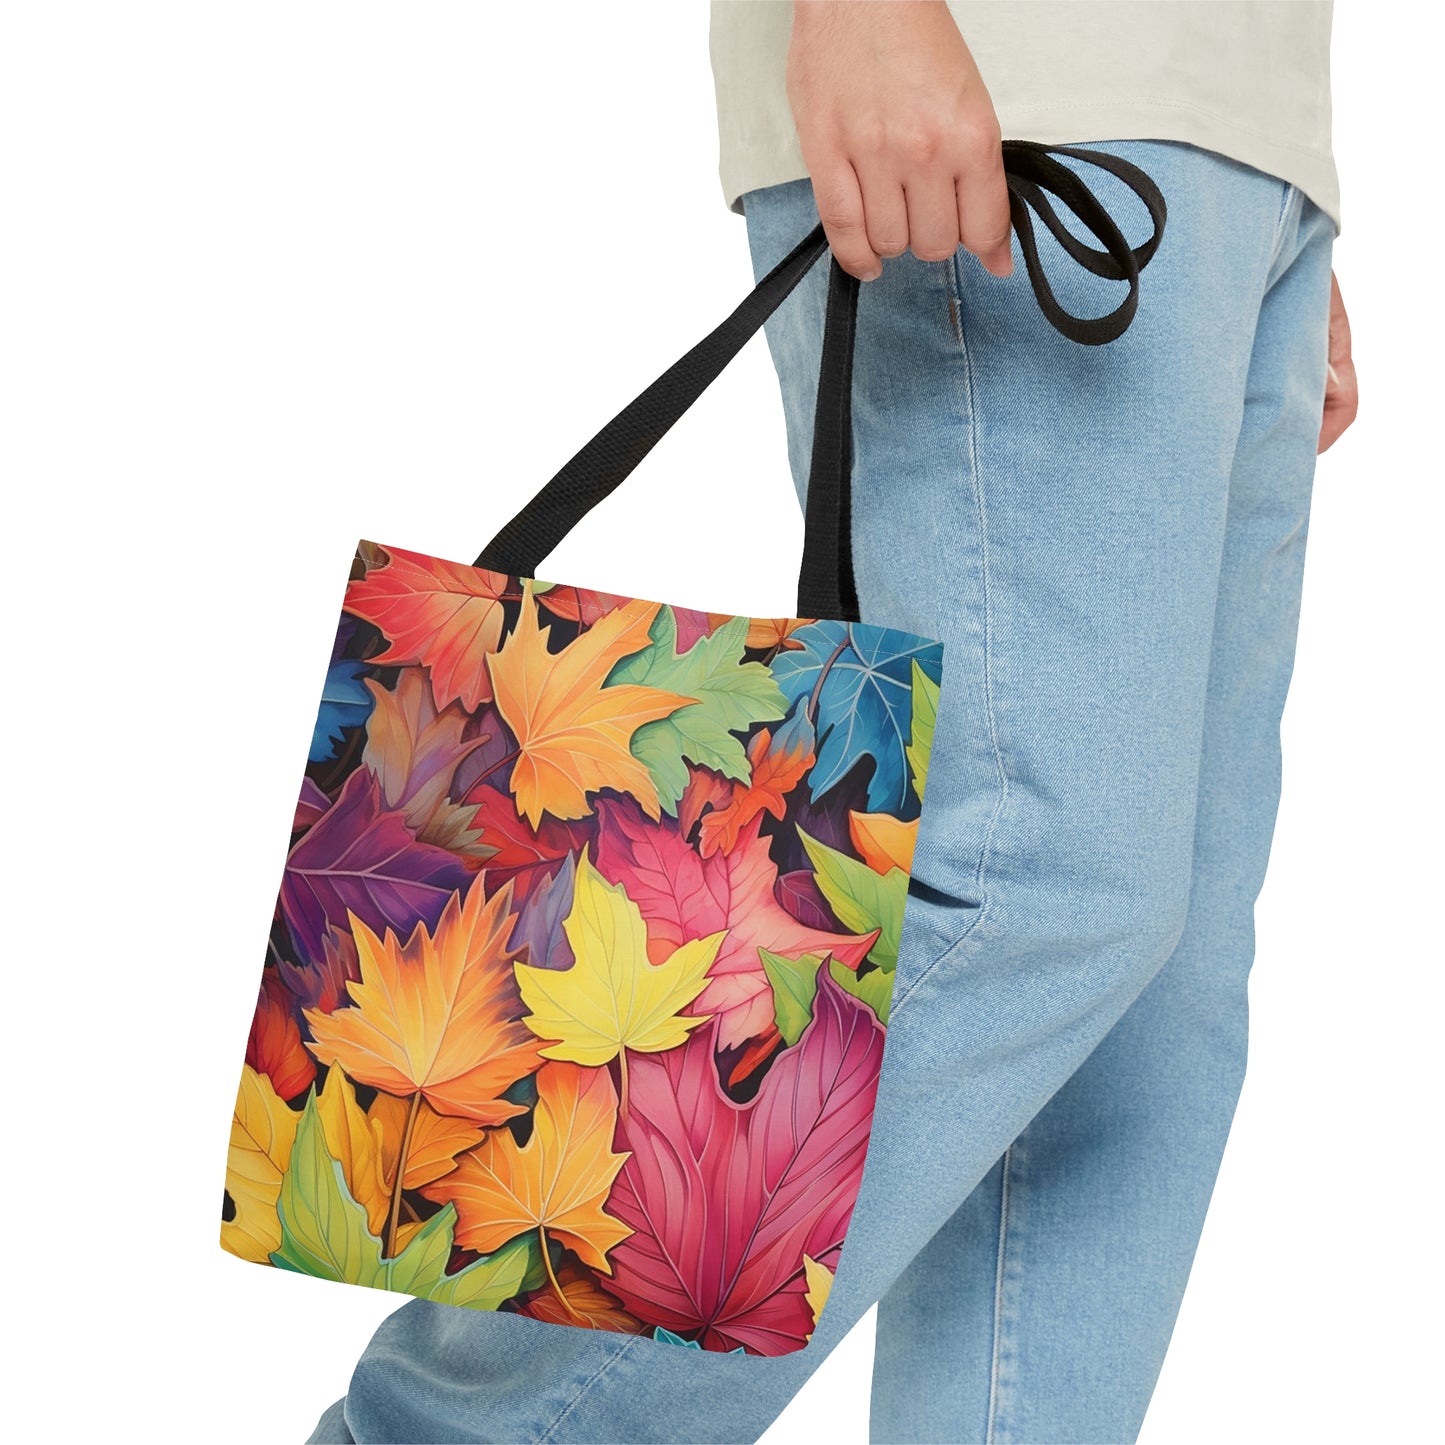 Colorful Fall Leaves Tote Bag (AOP)